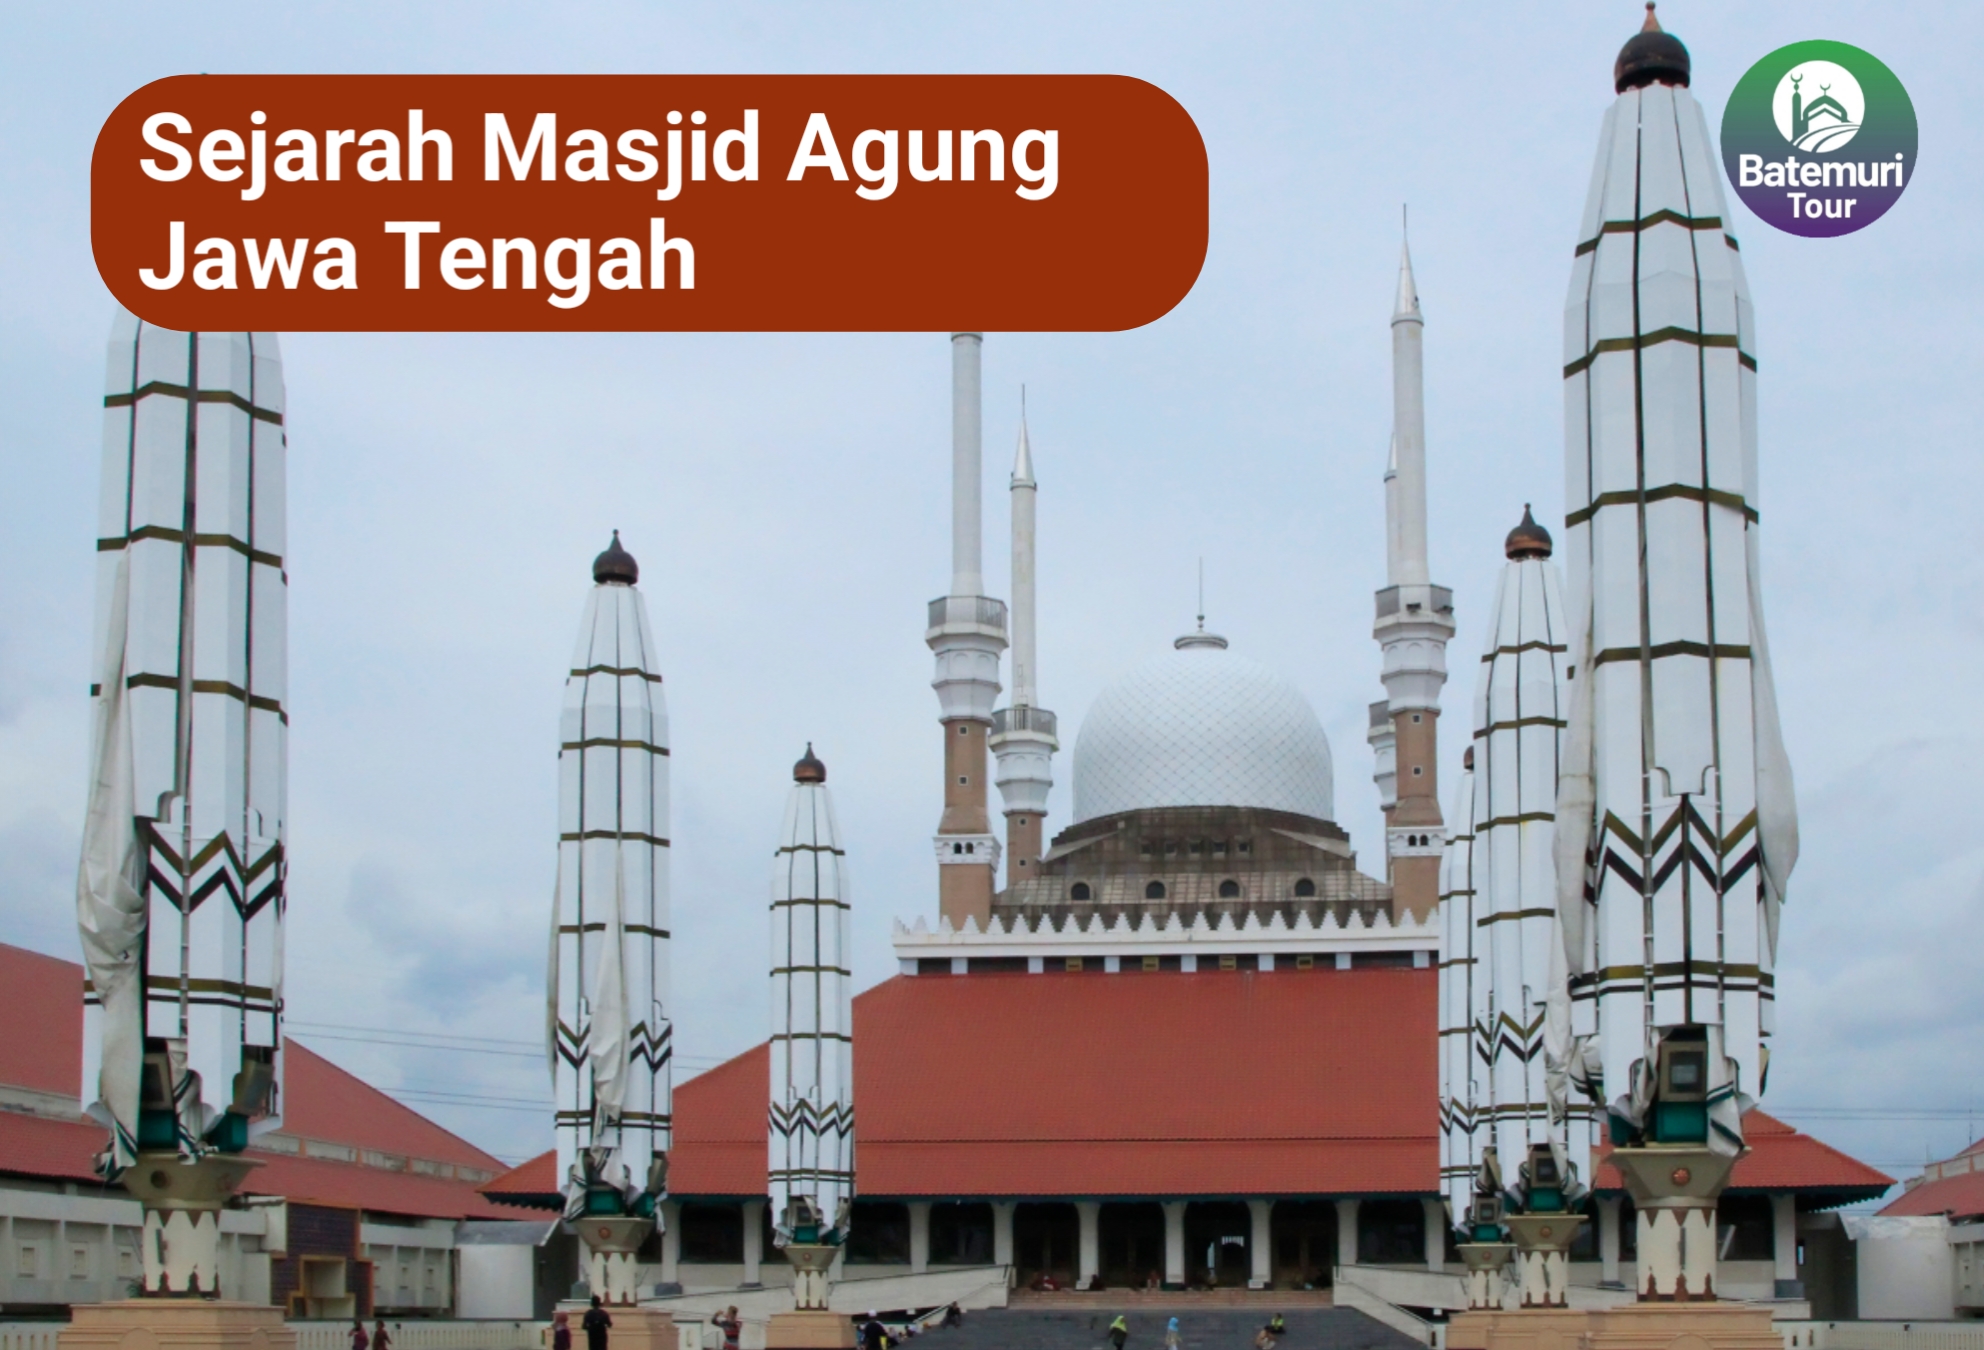 Sejarah Masjid Agung Jawa Tengah